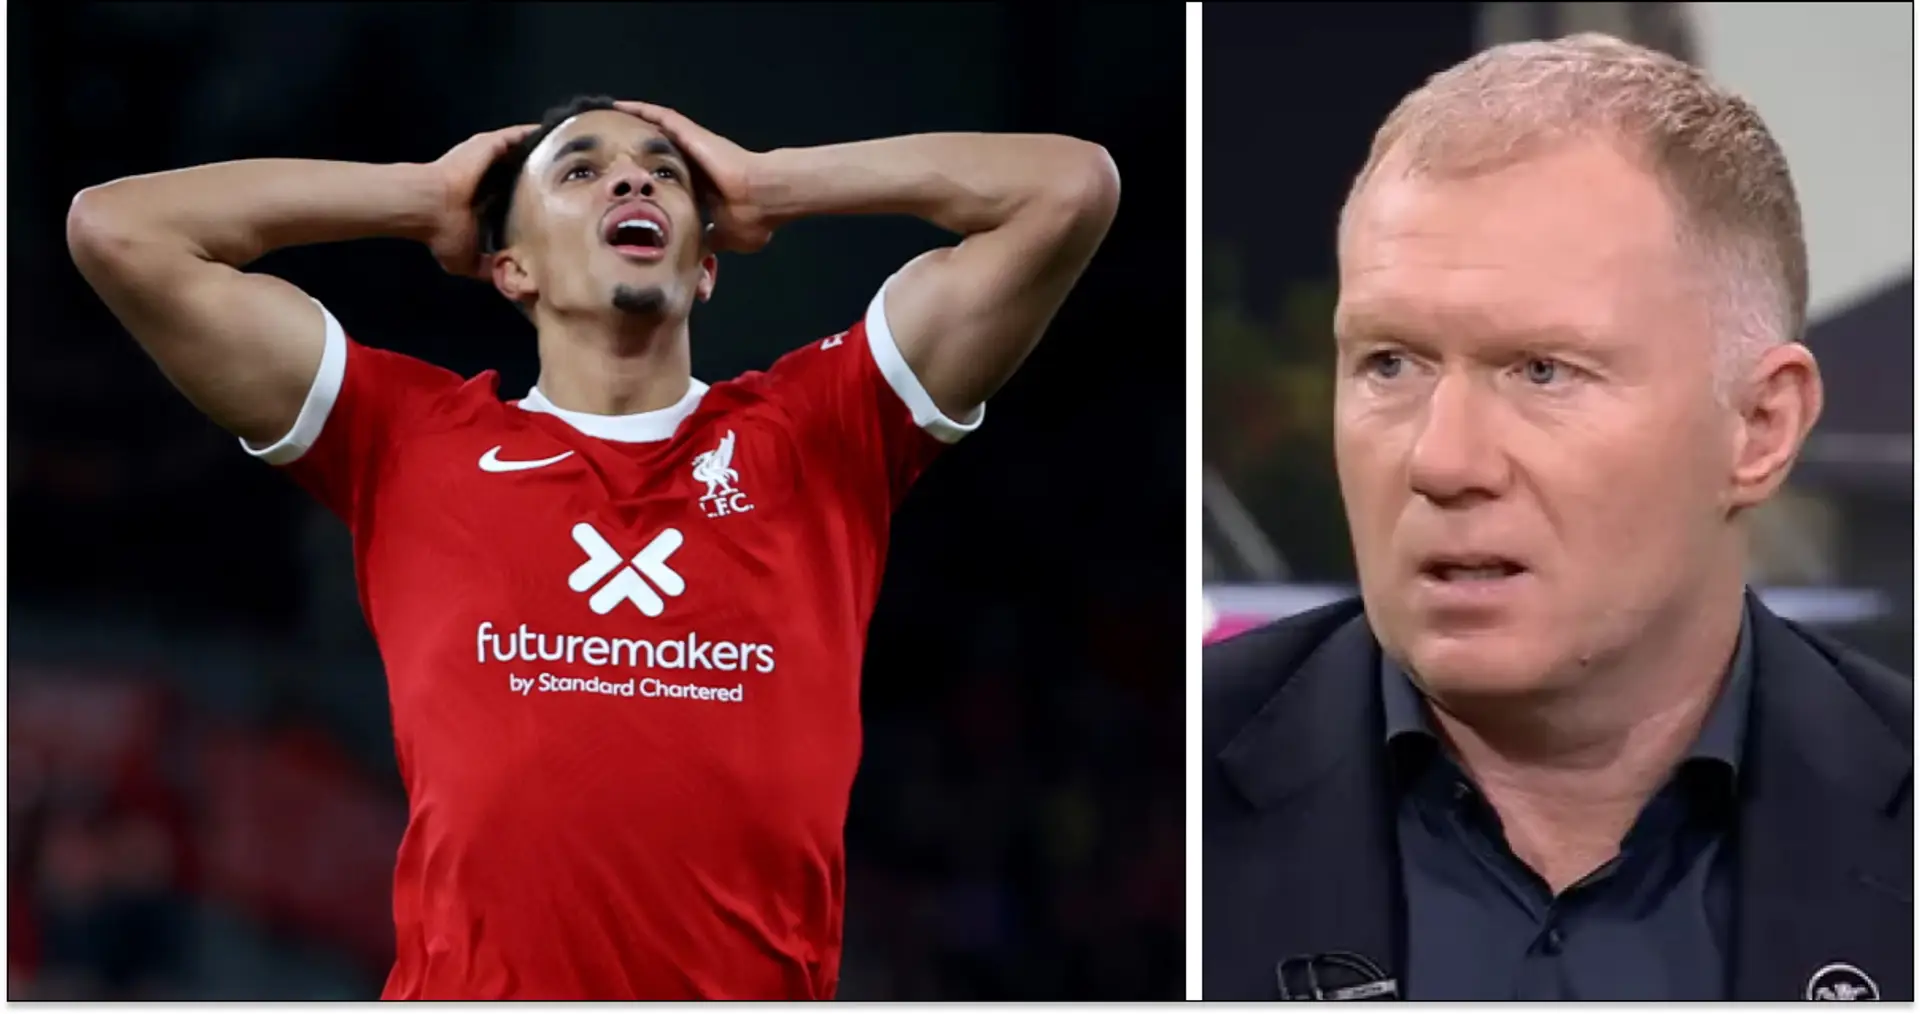 'Felt like kids' football': Scholes says four 'stupid' Liverpool players 'helped' Man United